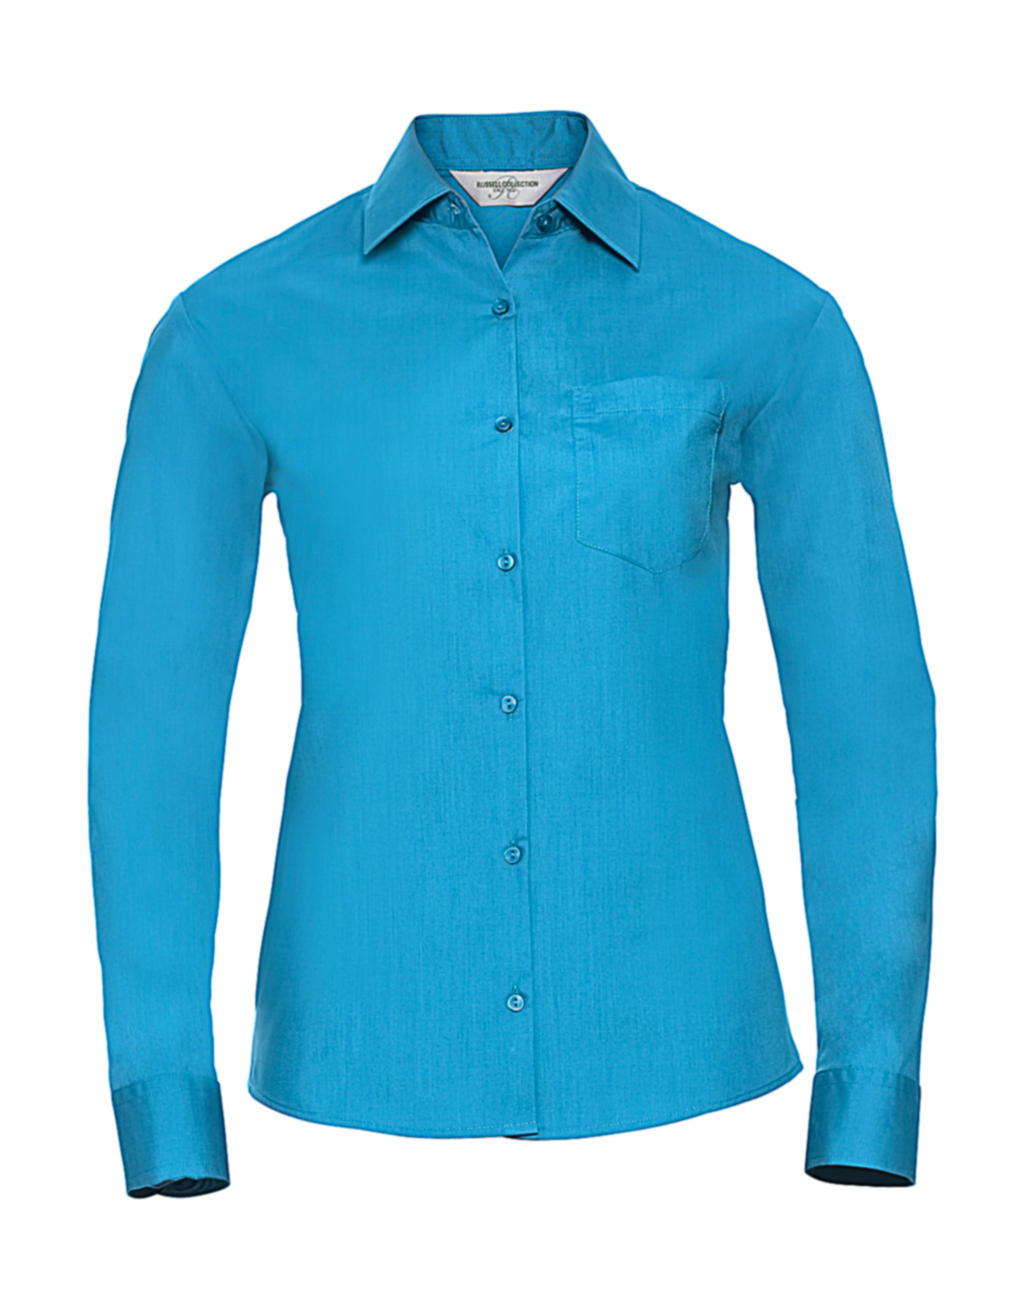  Ladies LS Poplin Shirt in Farbe Turquoise